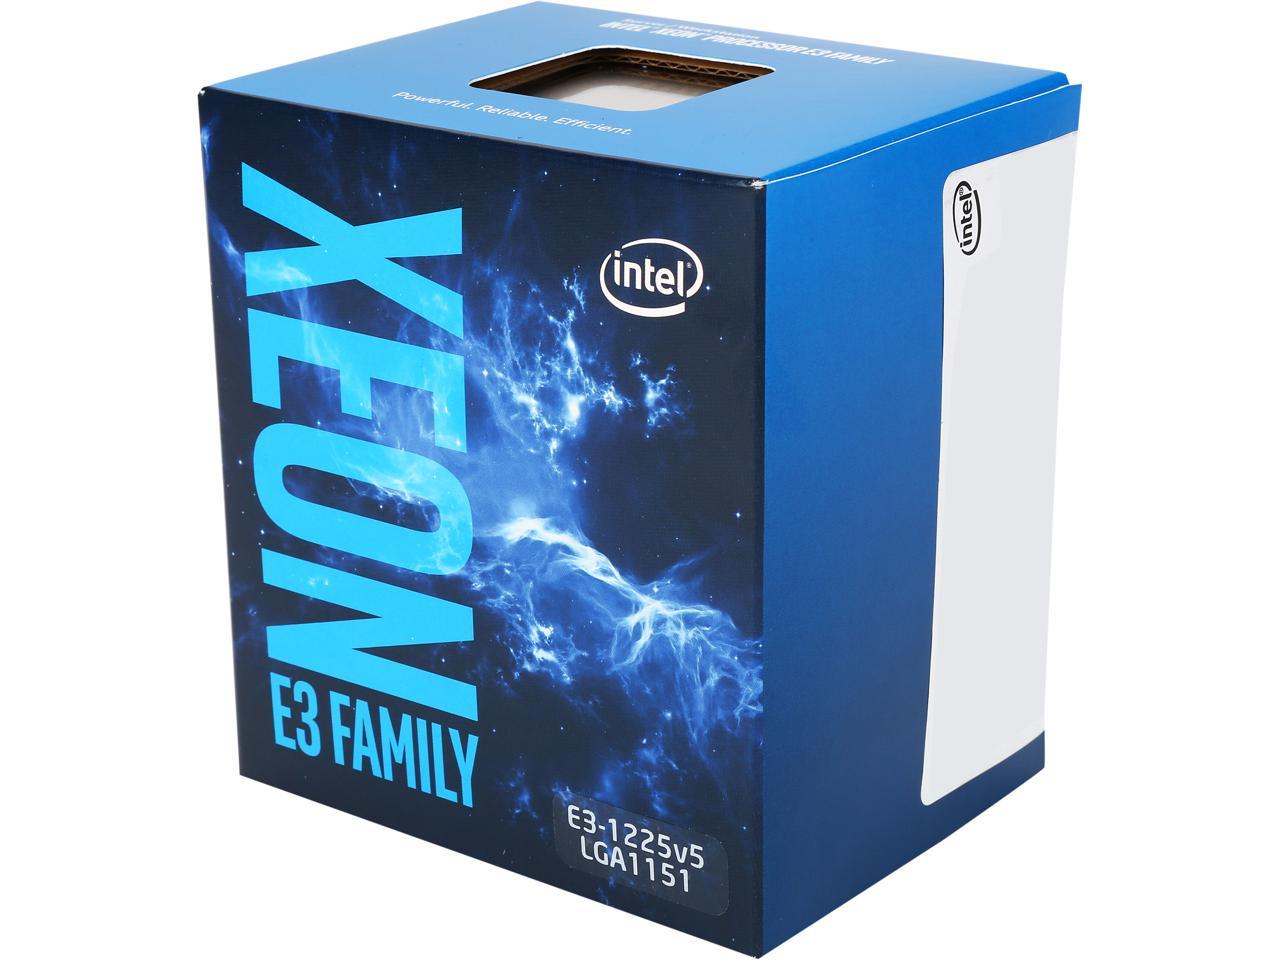 Intel Xeon E3-1225 V5 3.3 GHz LGA 1151 80W BX80662E31225V5 Server 